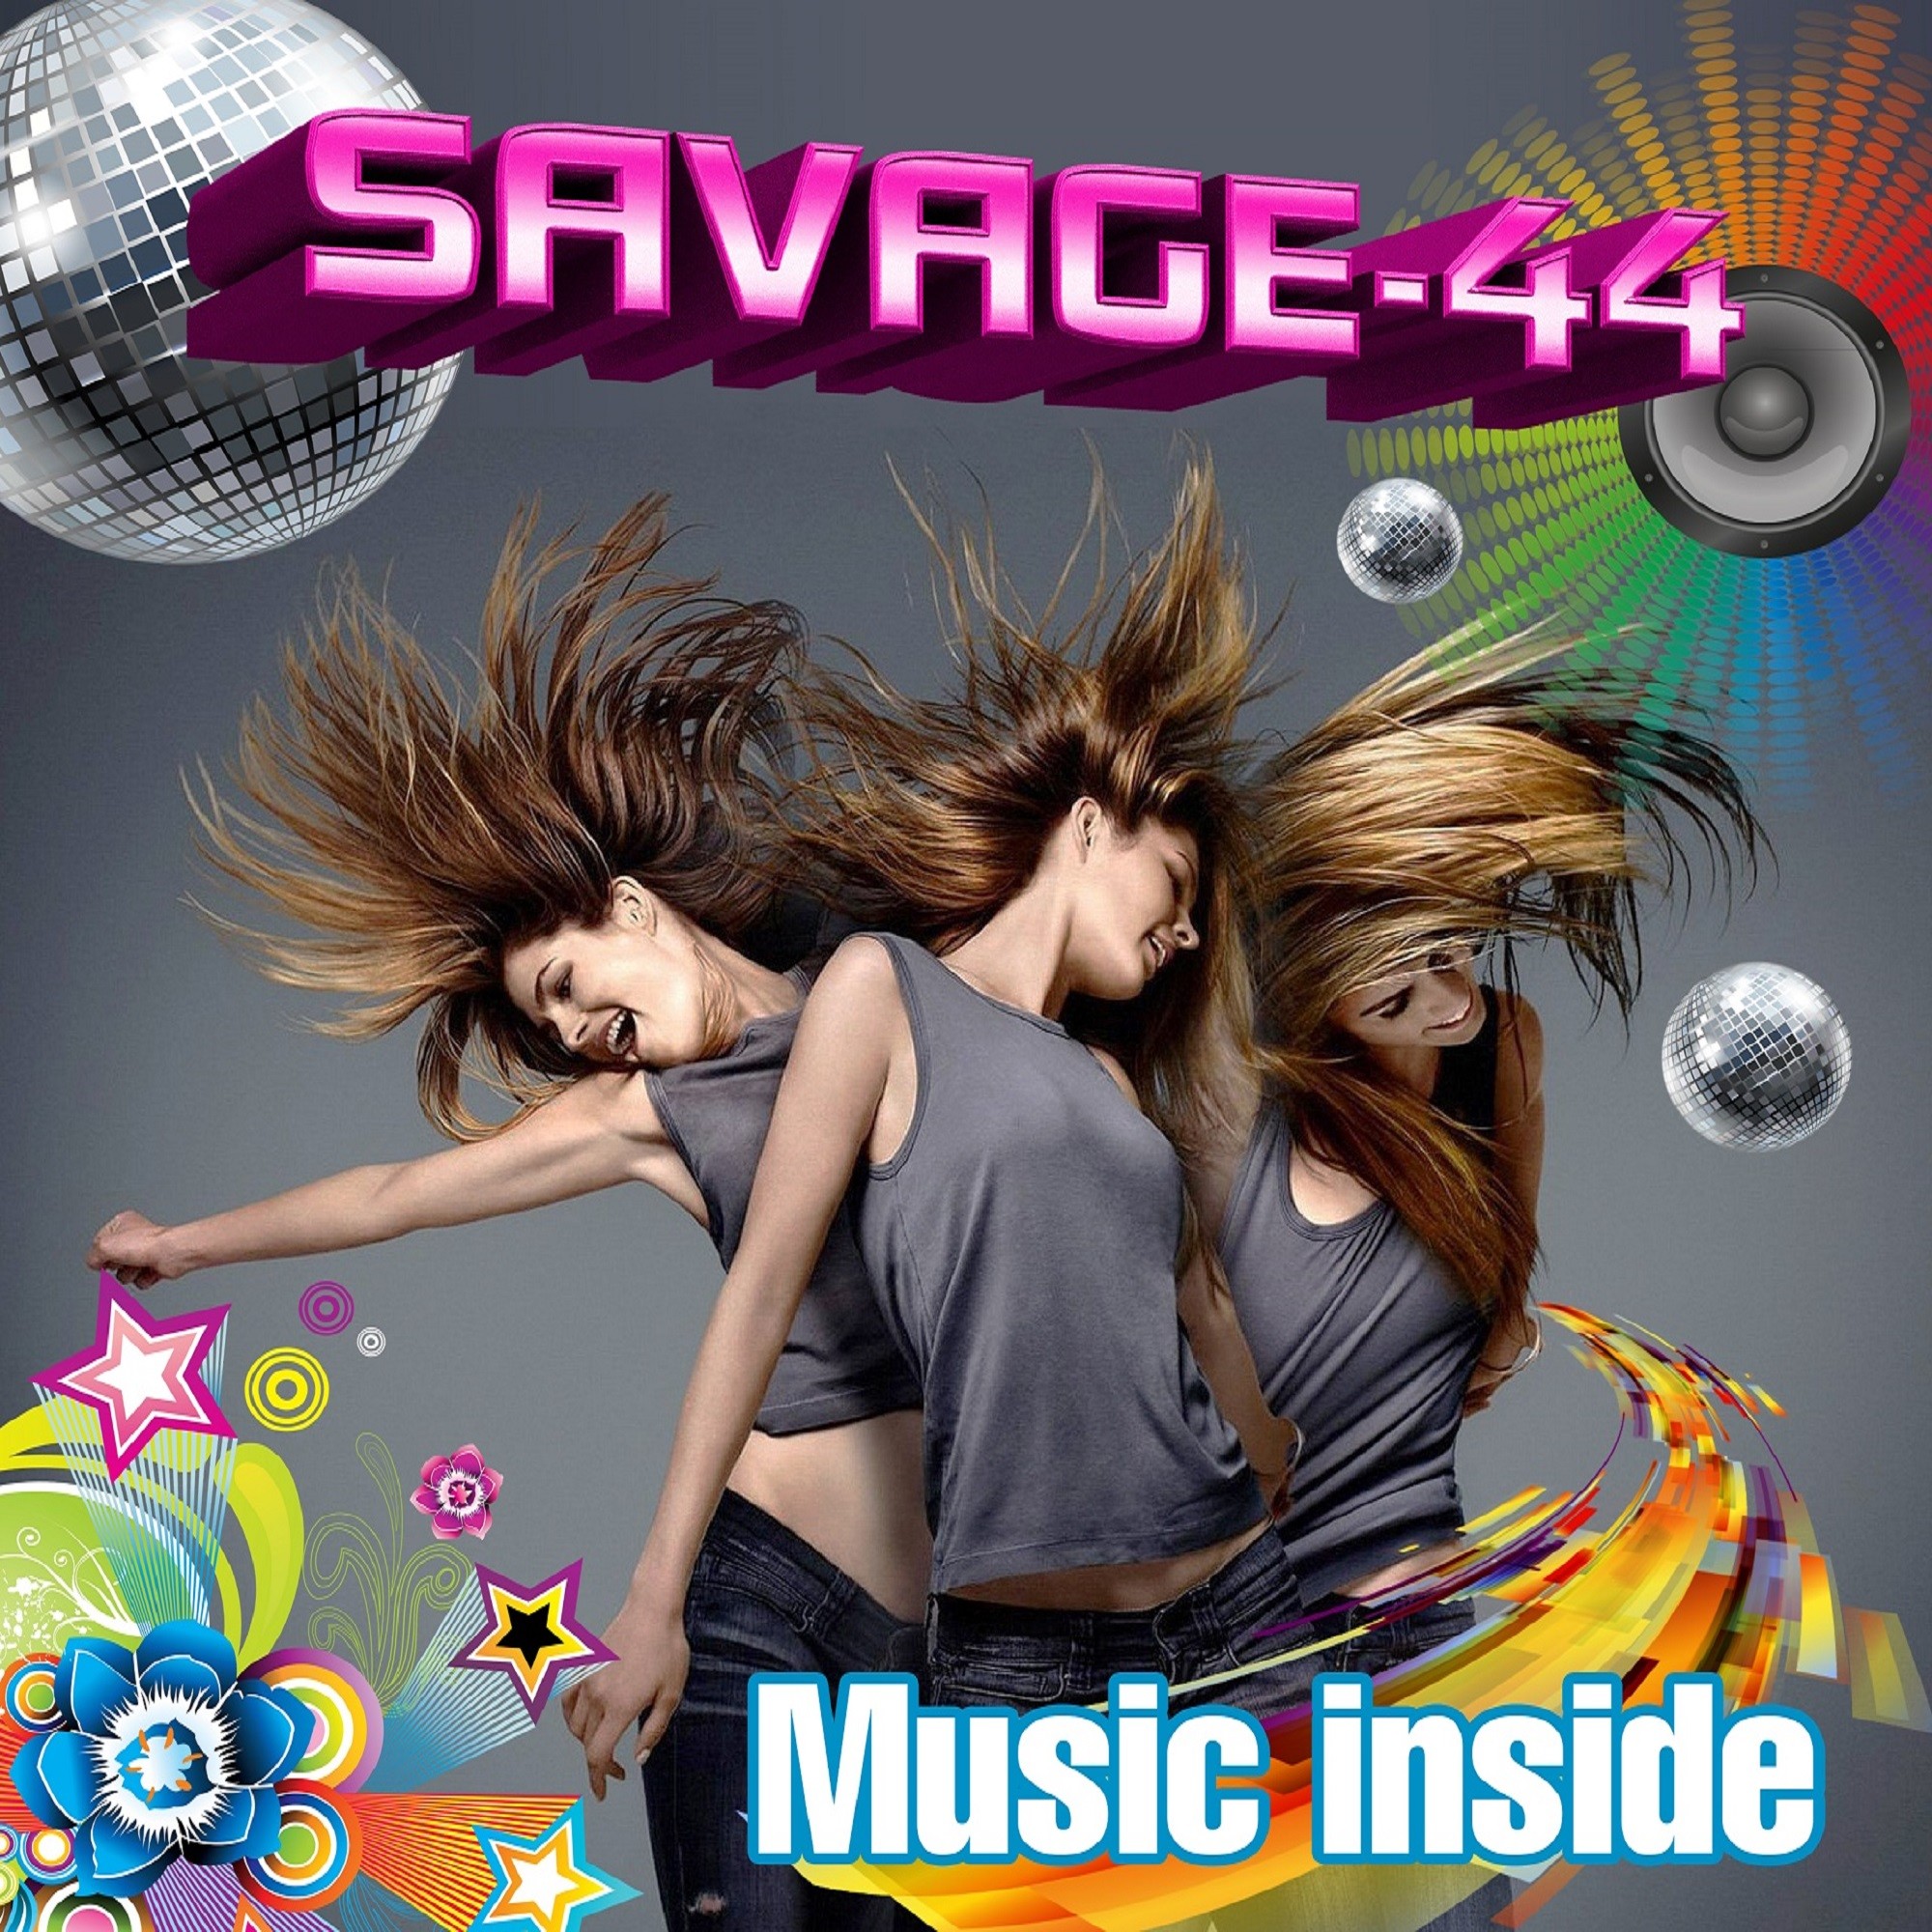 Savage 44 the music ring. Savage 44. Love emotion Radio Edit  — Savage-44.mp3. Meekz like me обои.